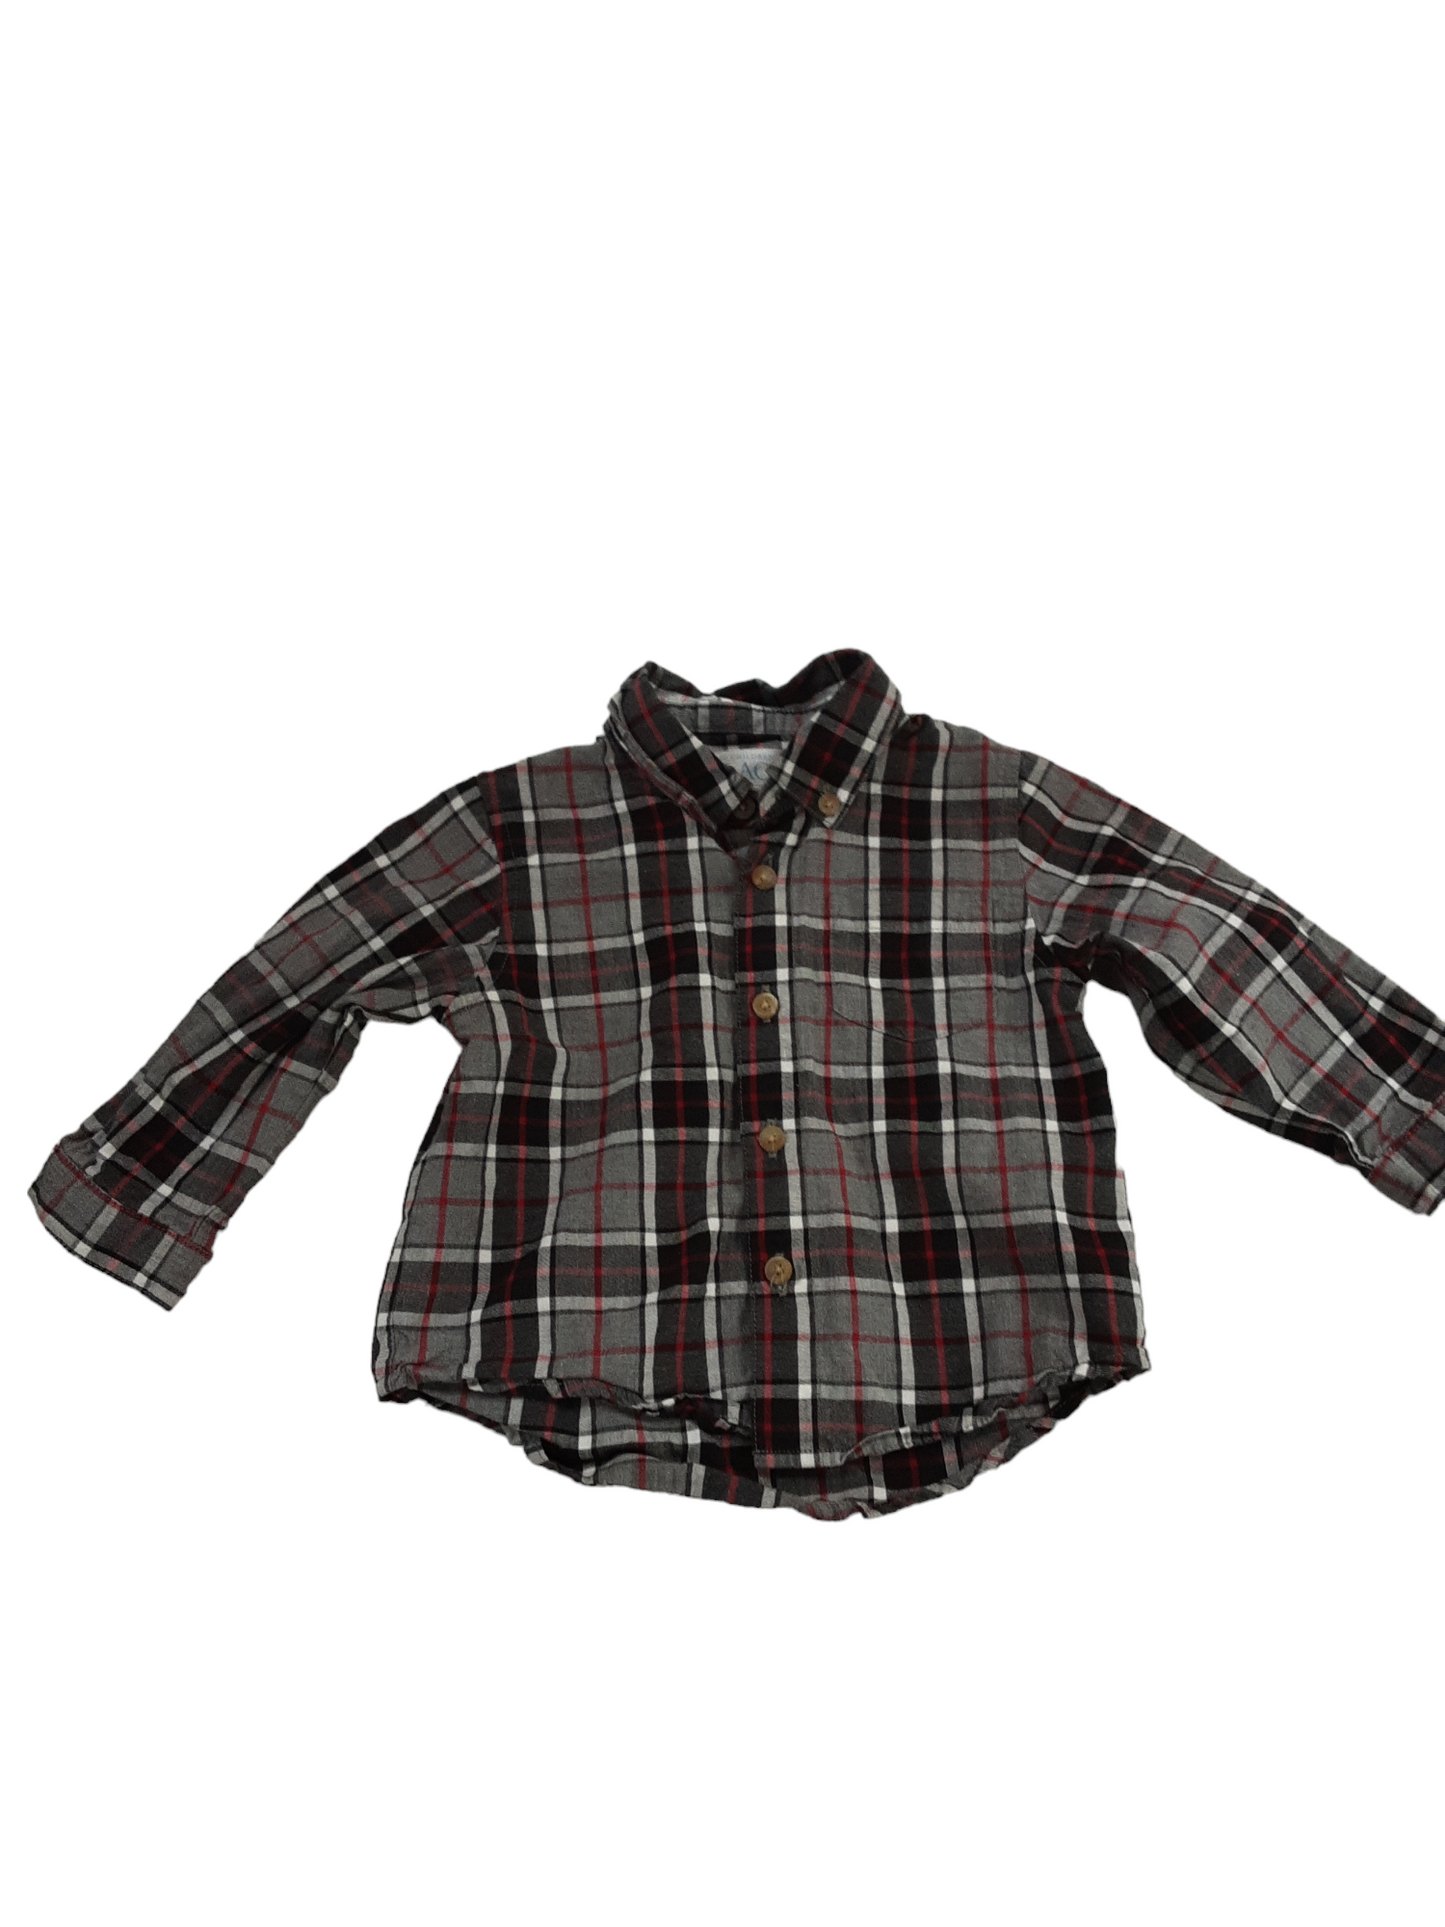 Grey black red plaid button shirt size 12months